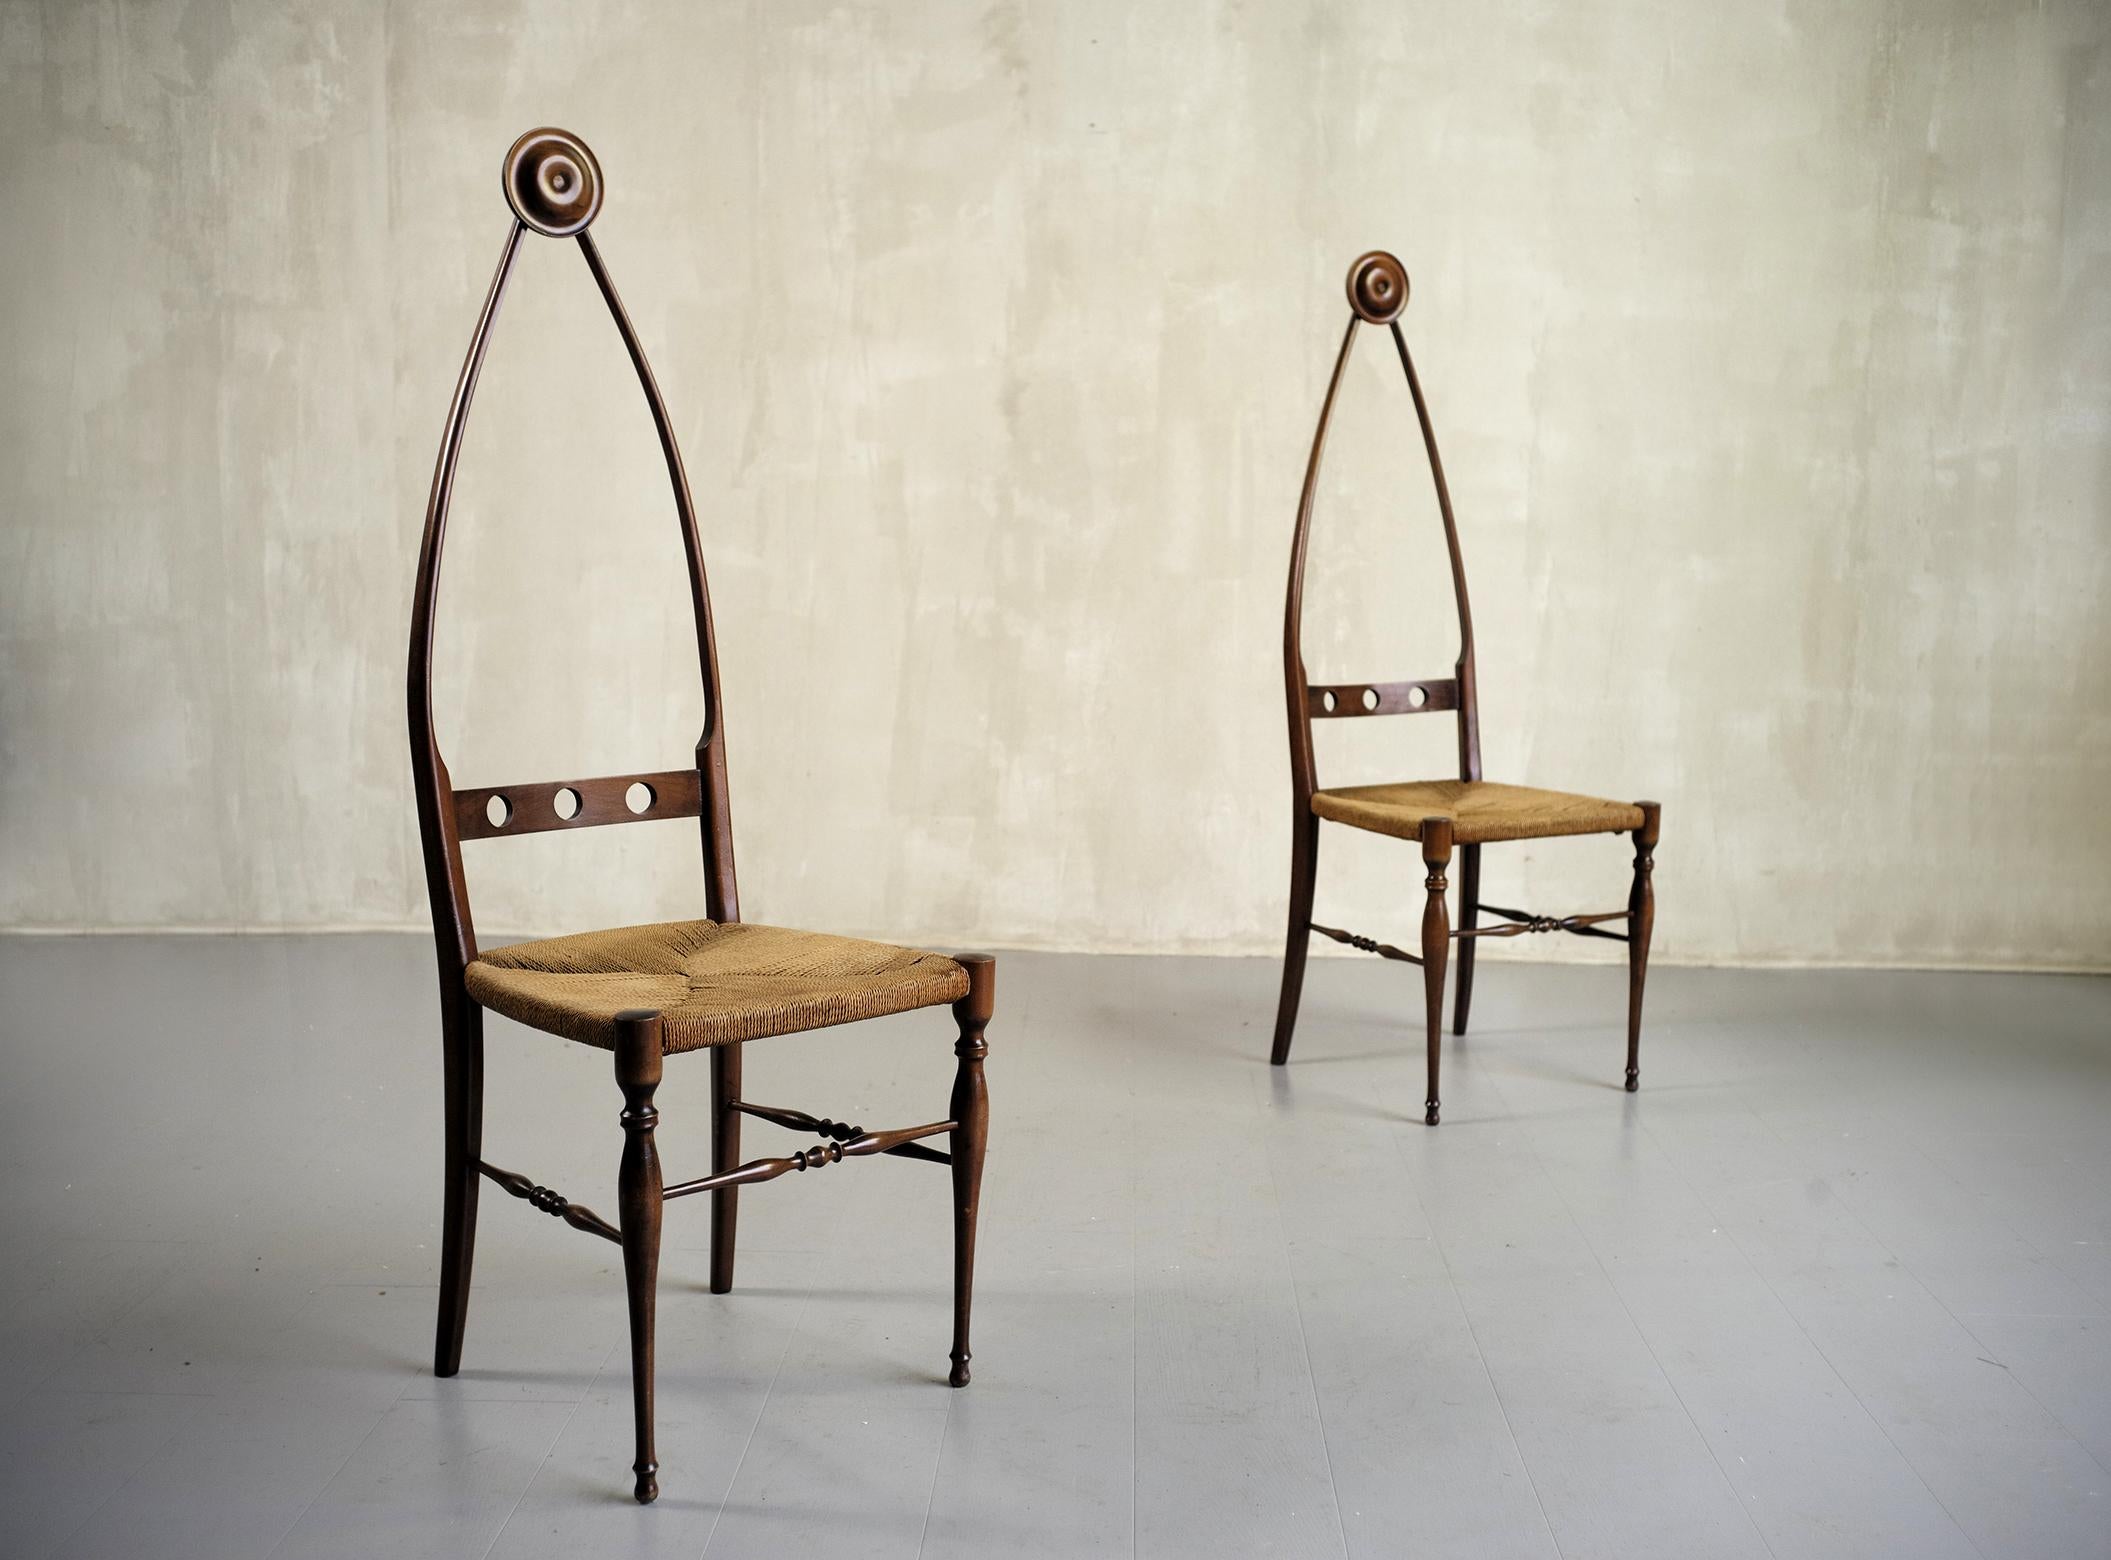 Italian Pozzi and Verga, Pair of Chairs, Italy, 1950